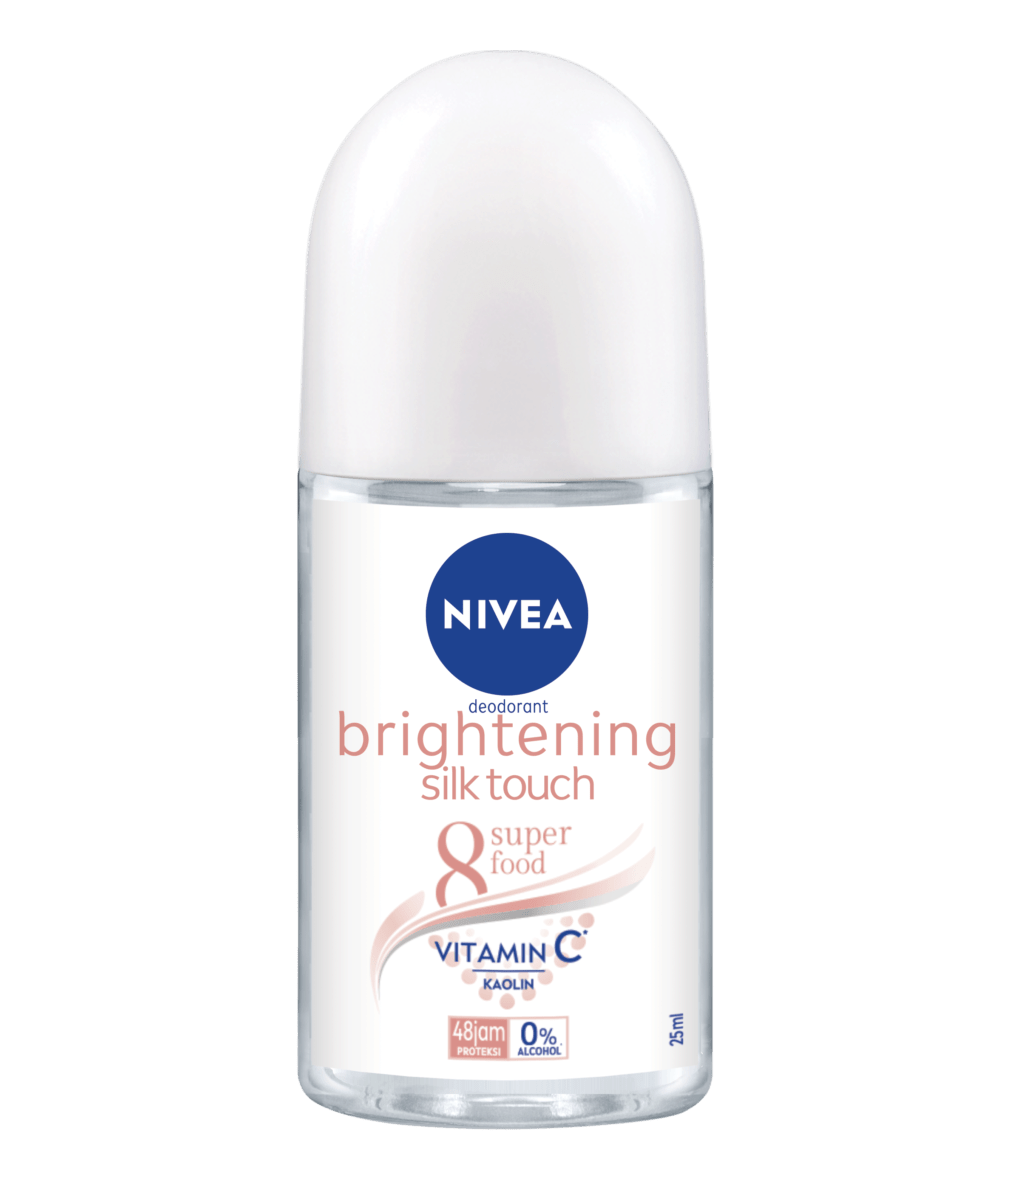 NIVEA Brightening Silk Touch 8 Superfood Deodorant Roll On